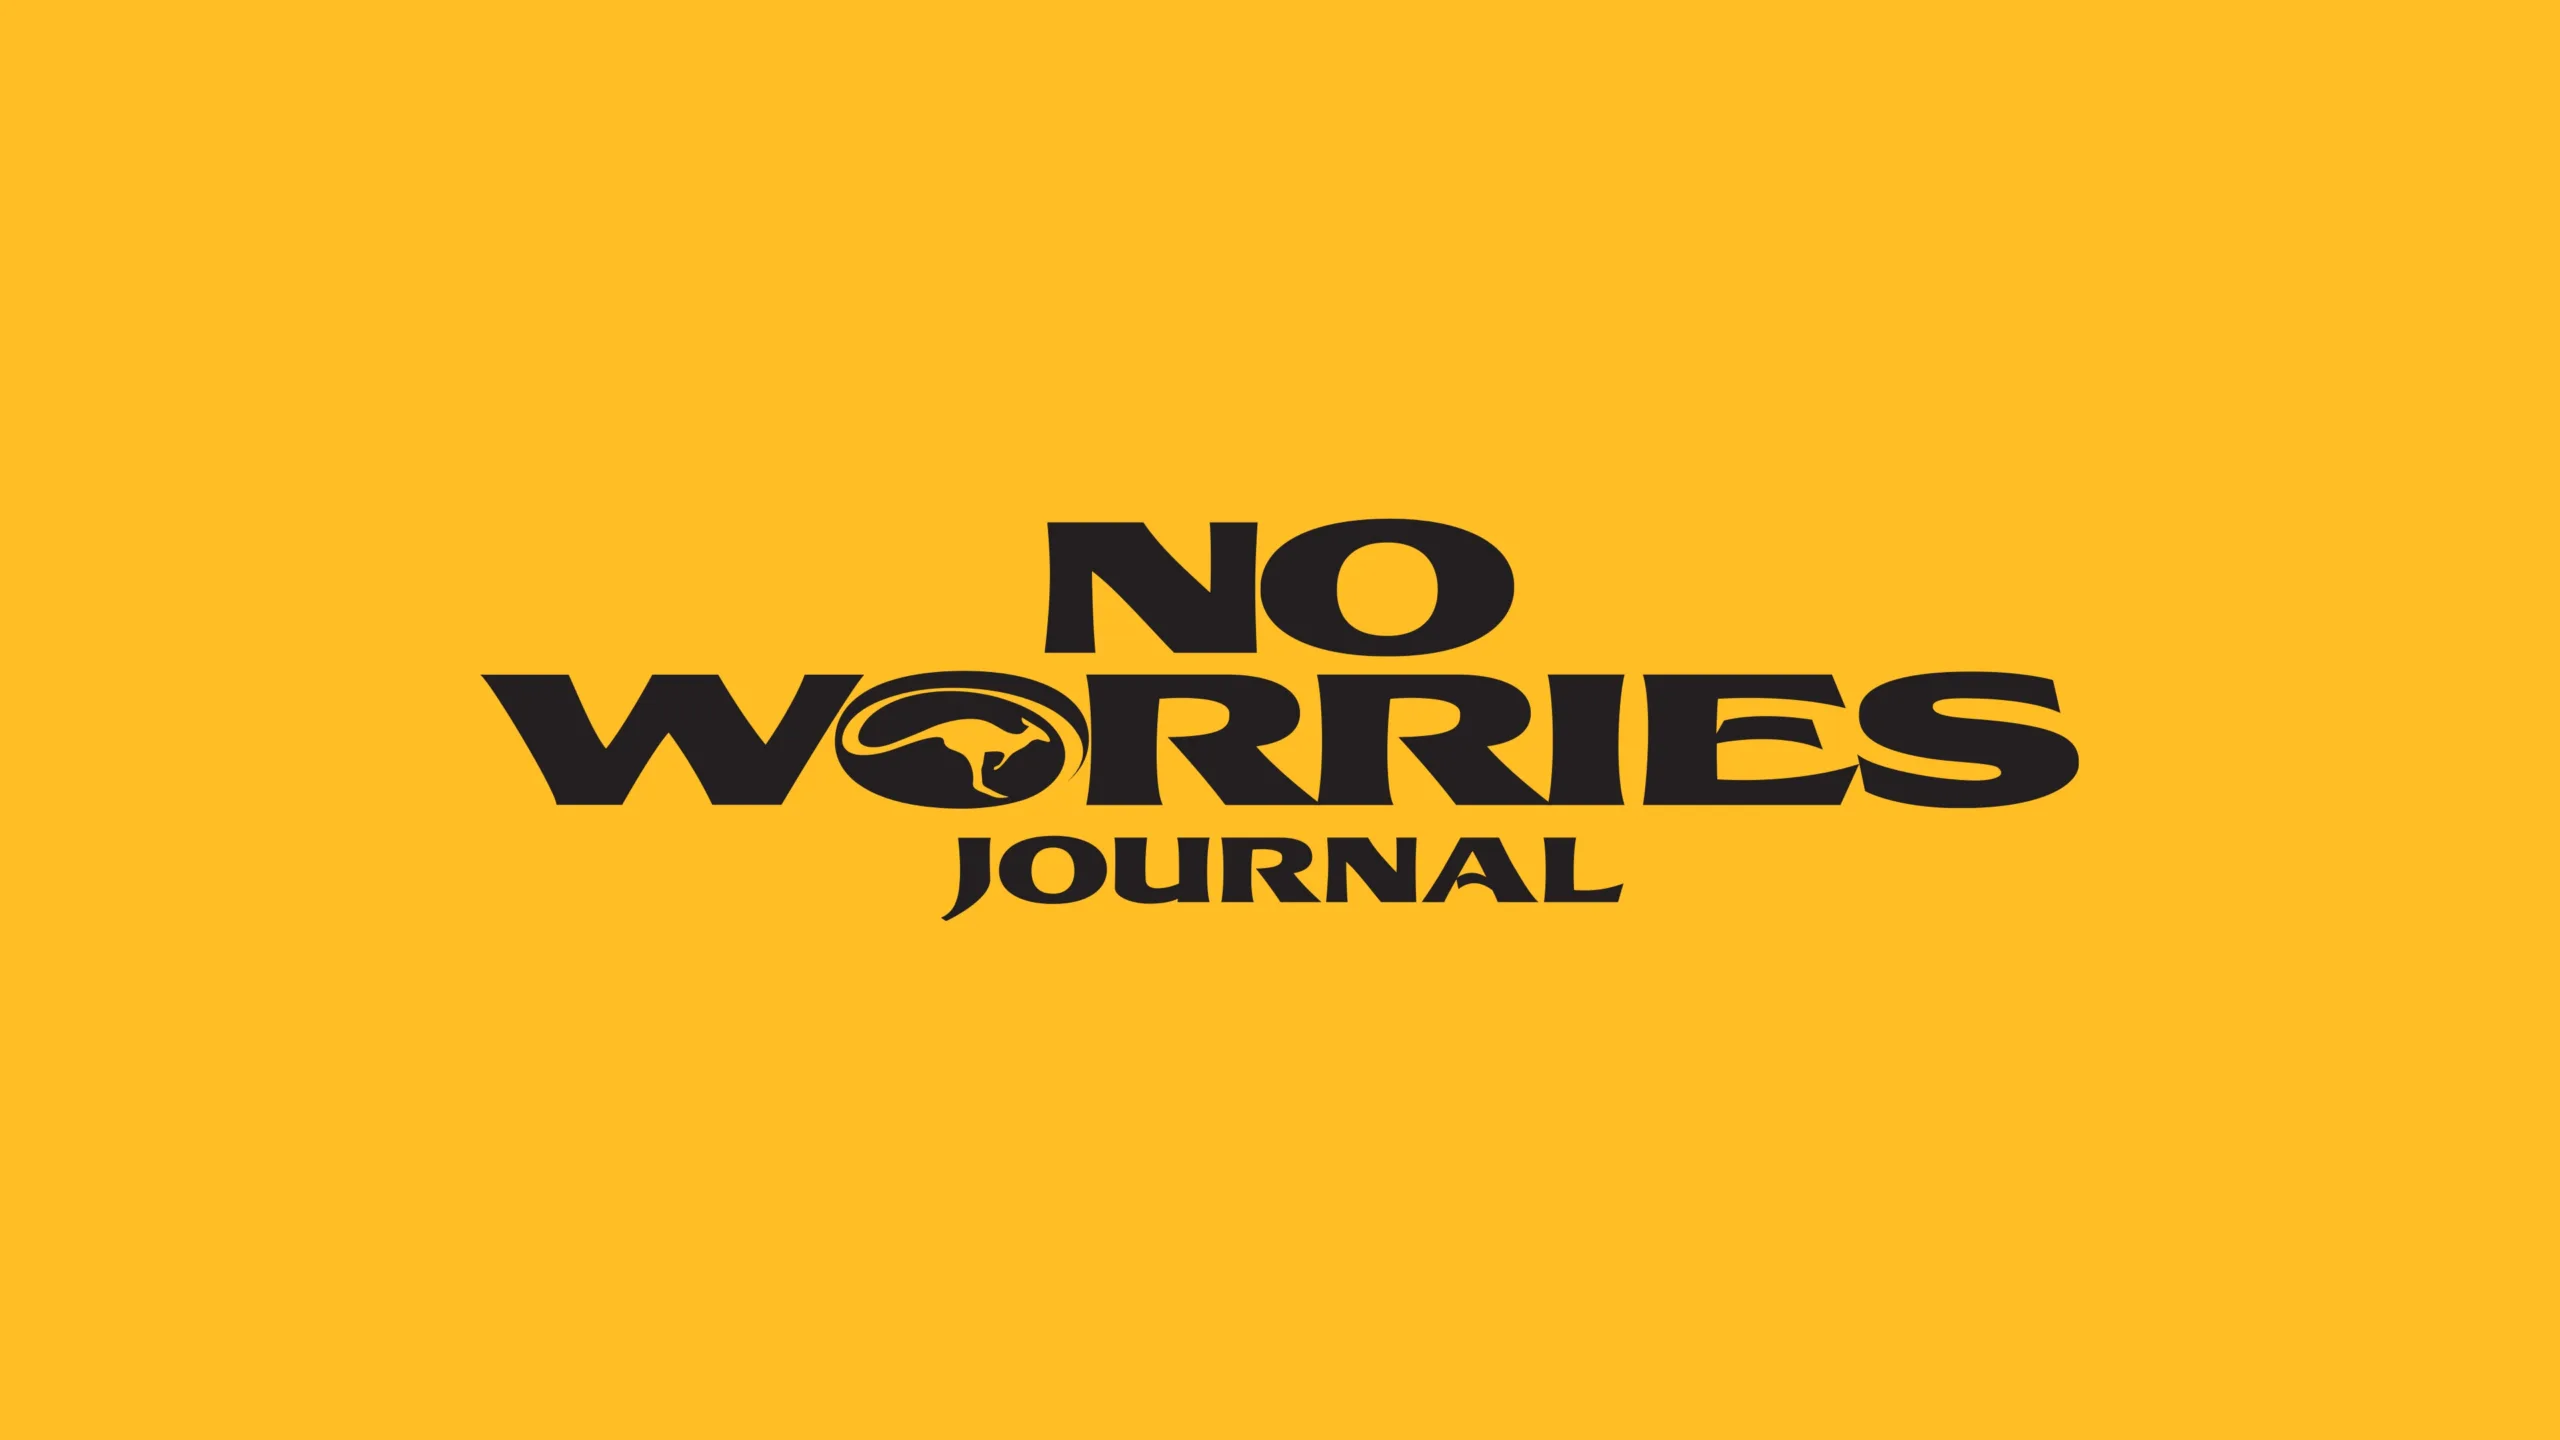 No worries club branding logo design